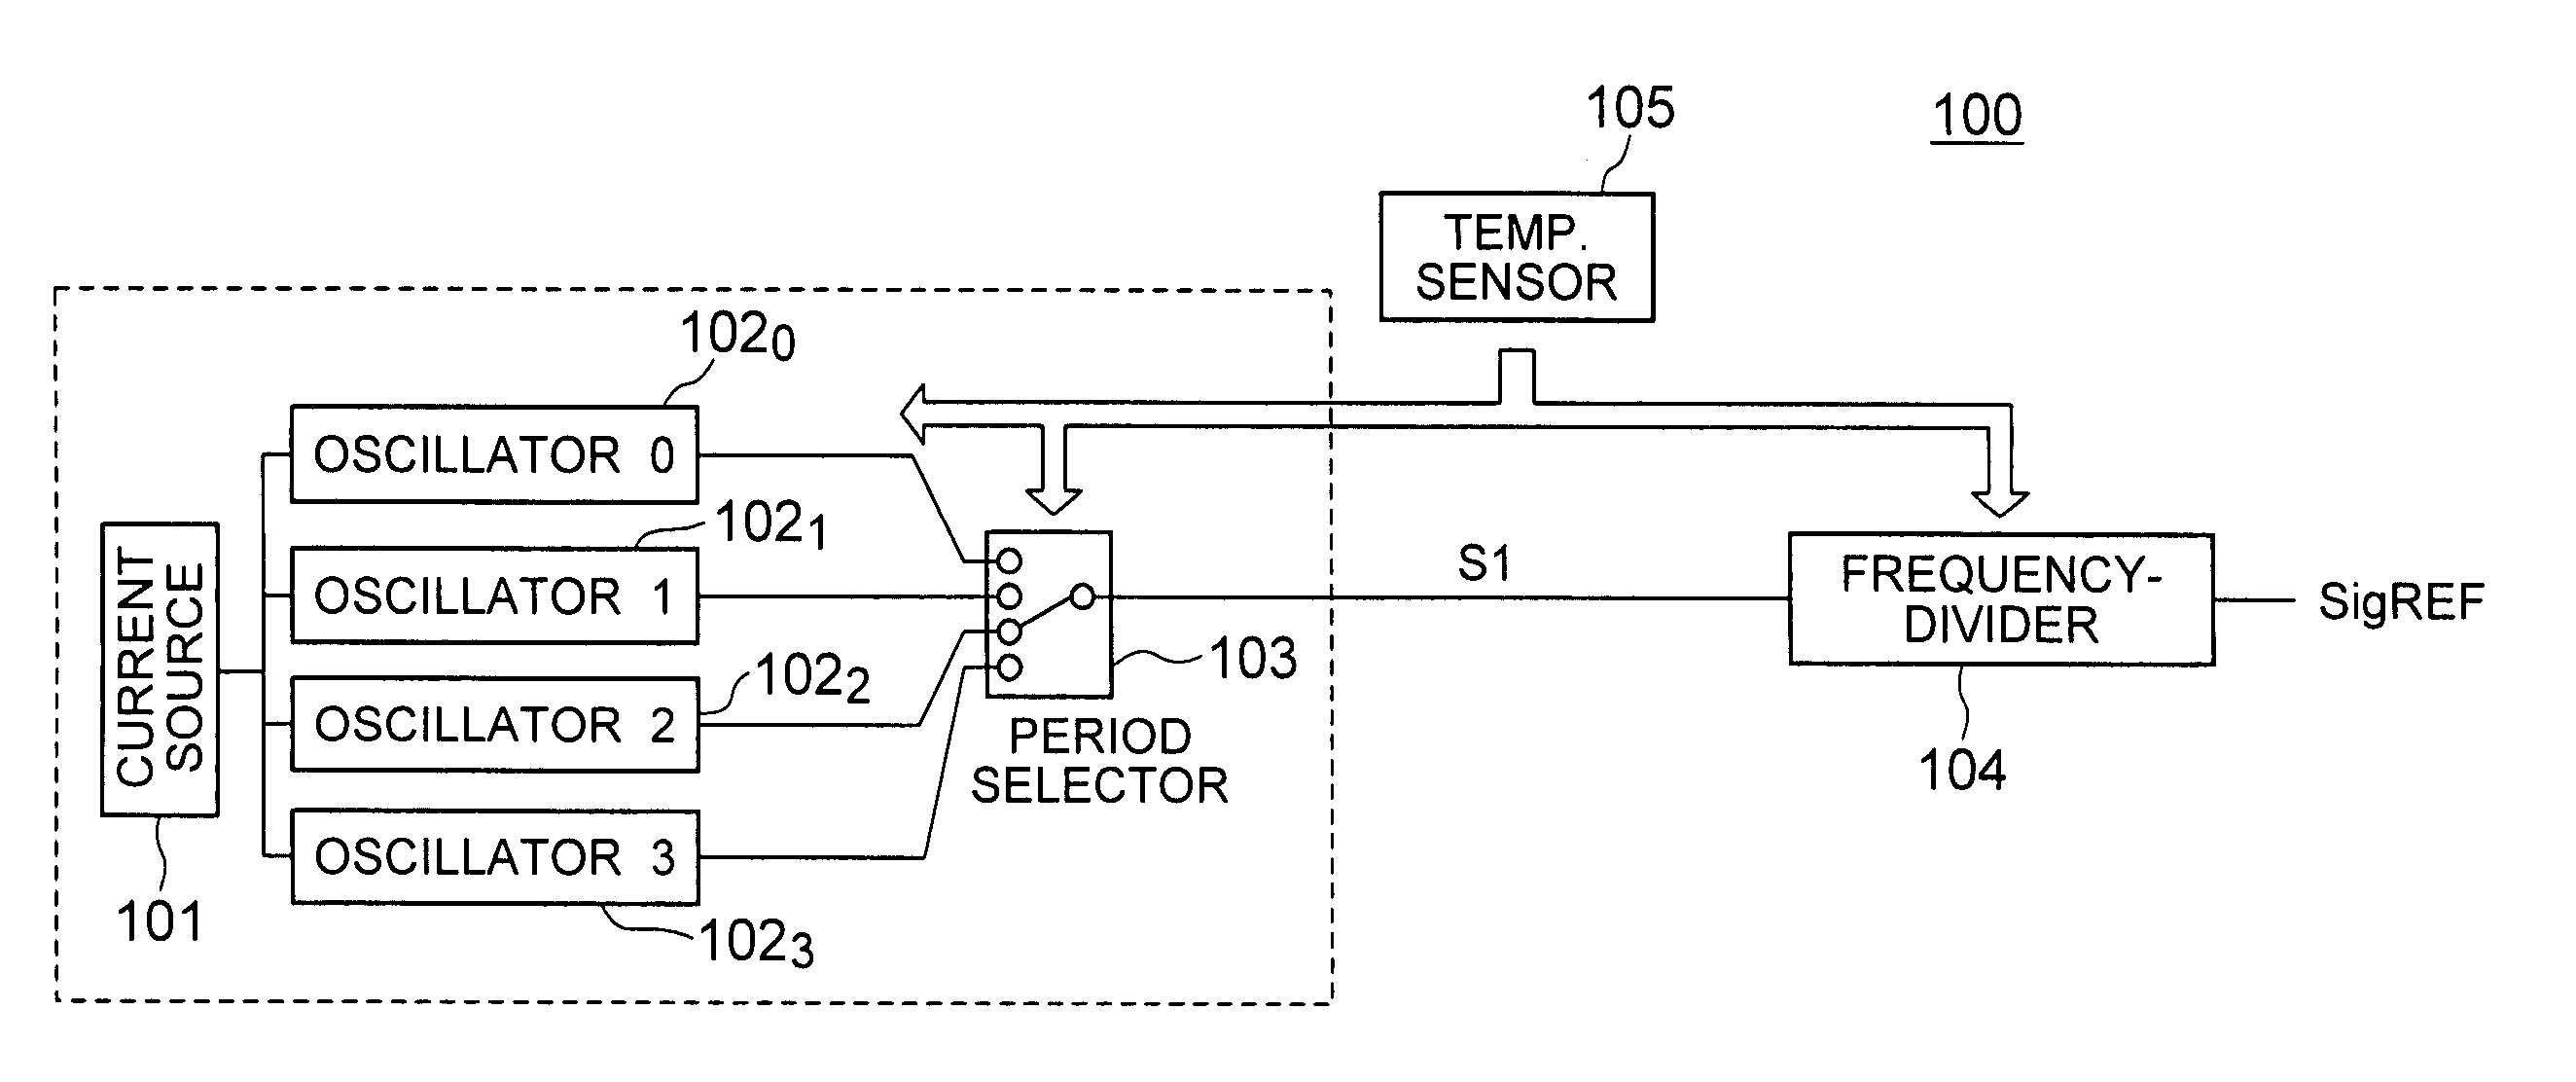 Oscillator circuit having a temperature dependence